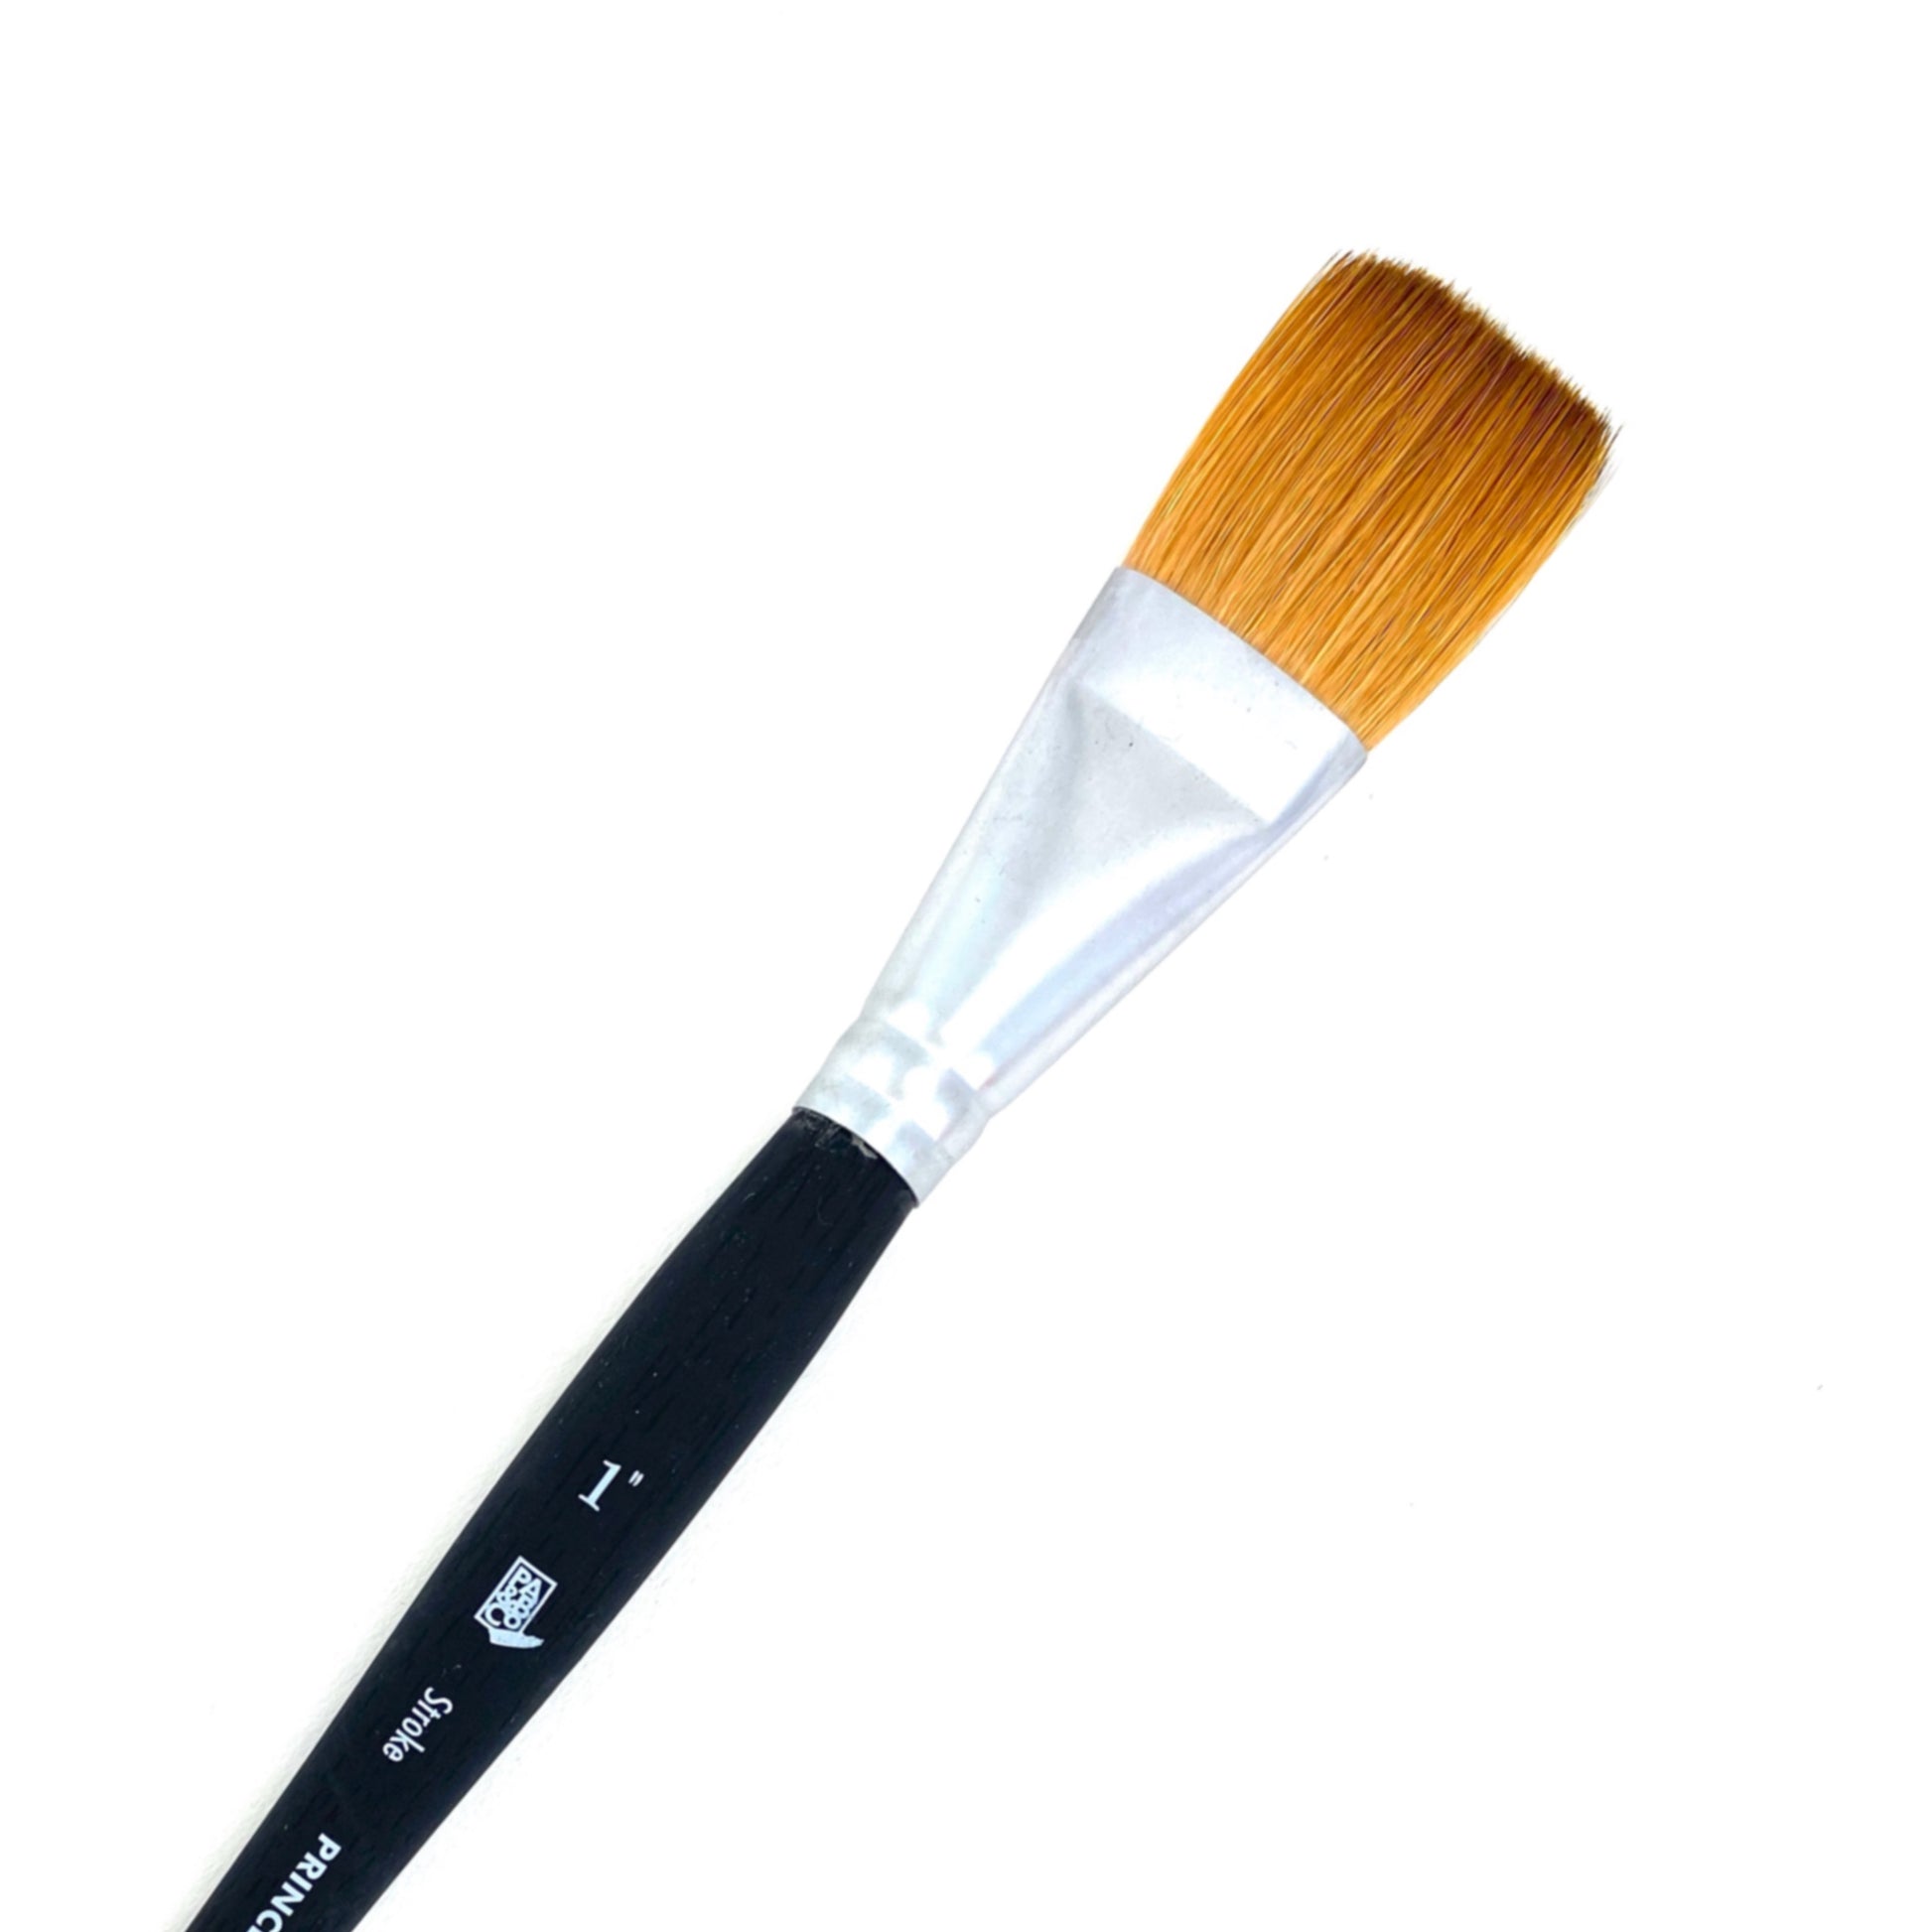 Princeton Artist Brush Co. Aqua Elite Professional Watercolor Paint Brushes 4850 Series - 4pc Synthetic Kolinsky Sable Watercolor Brush Set - Watercol